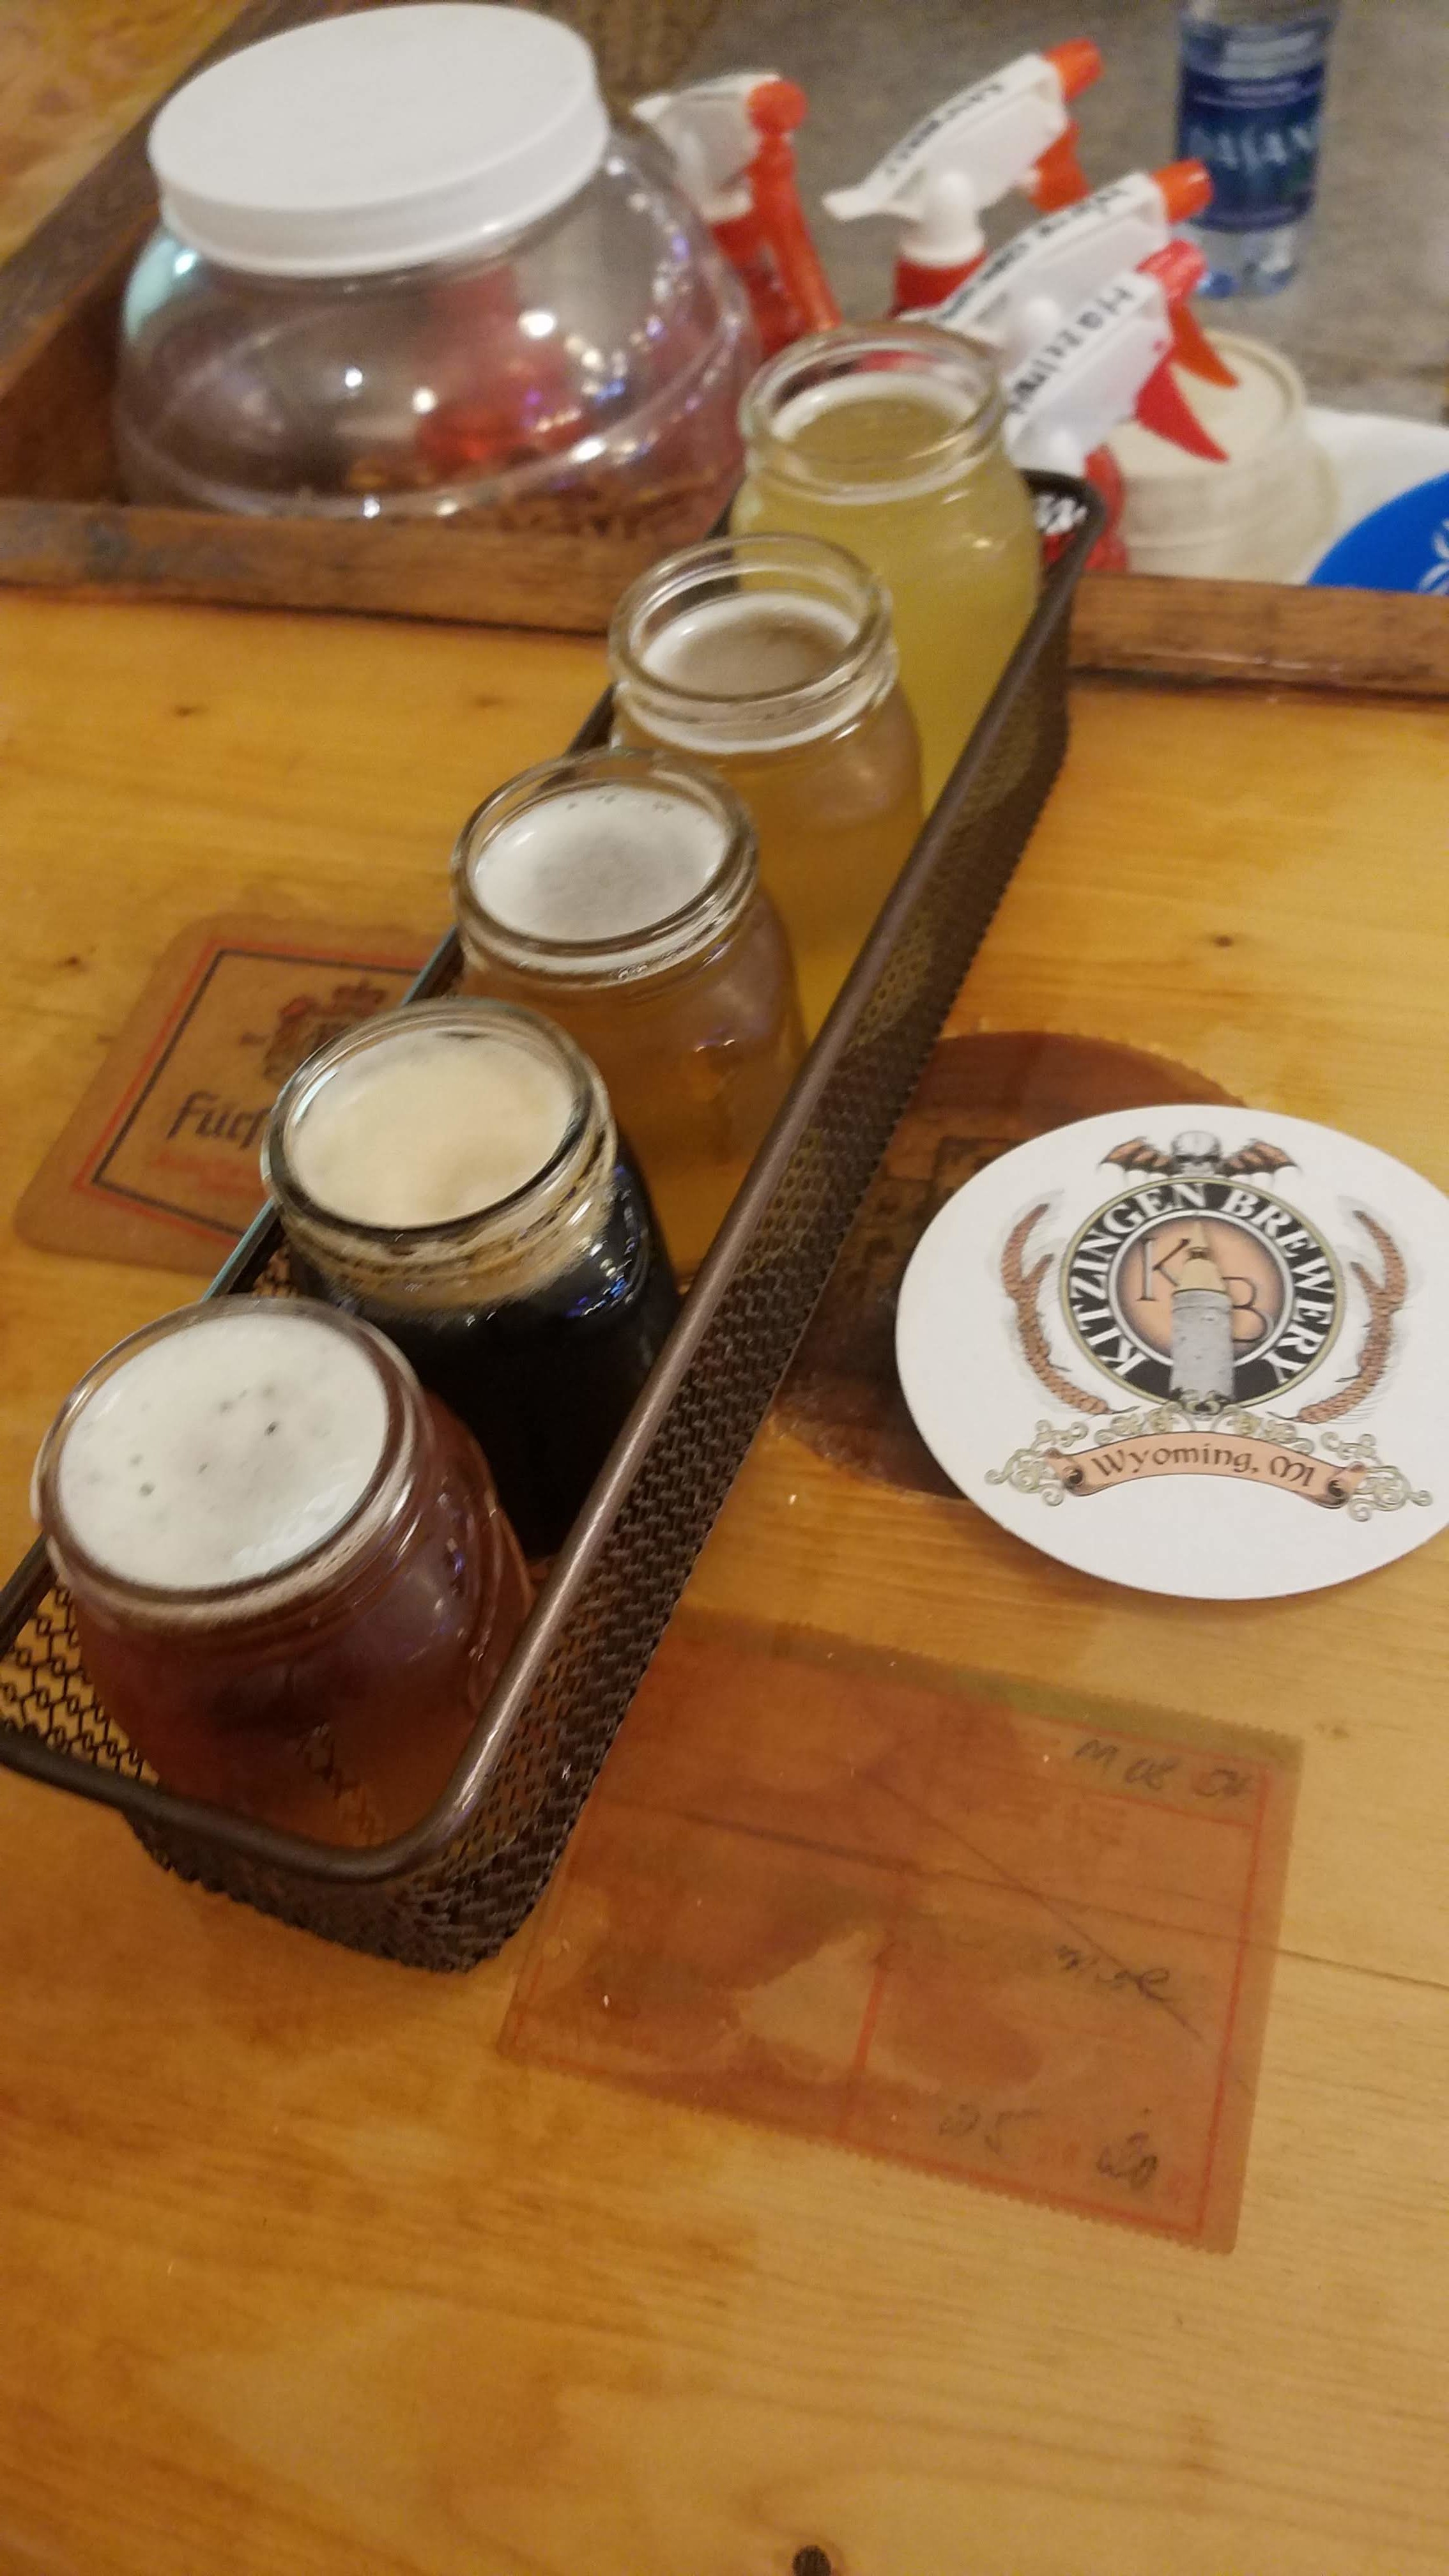 Kitzingen Brewery